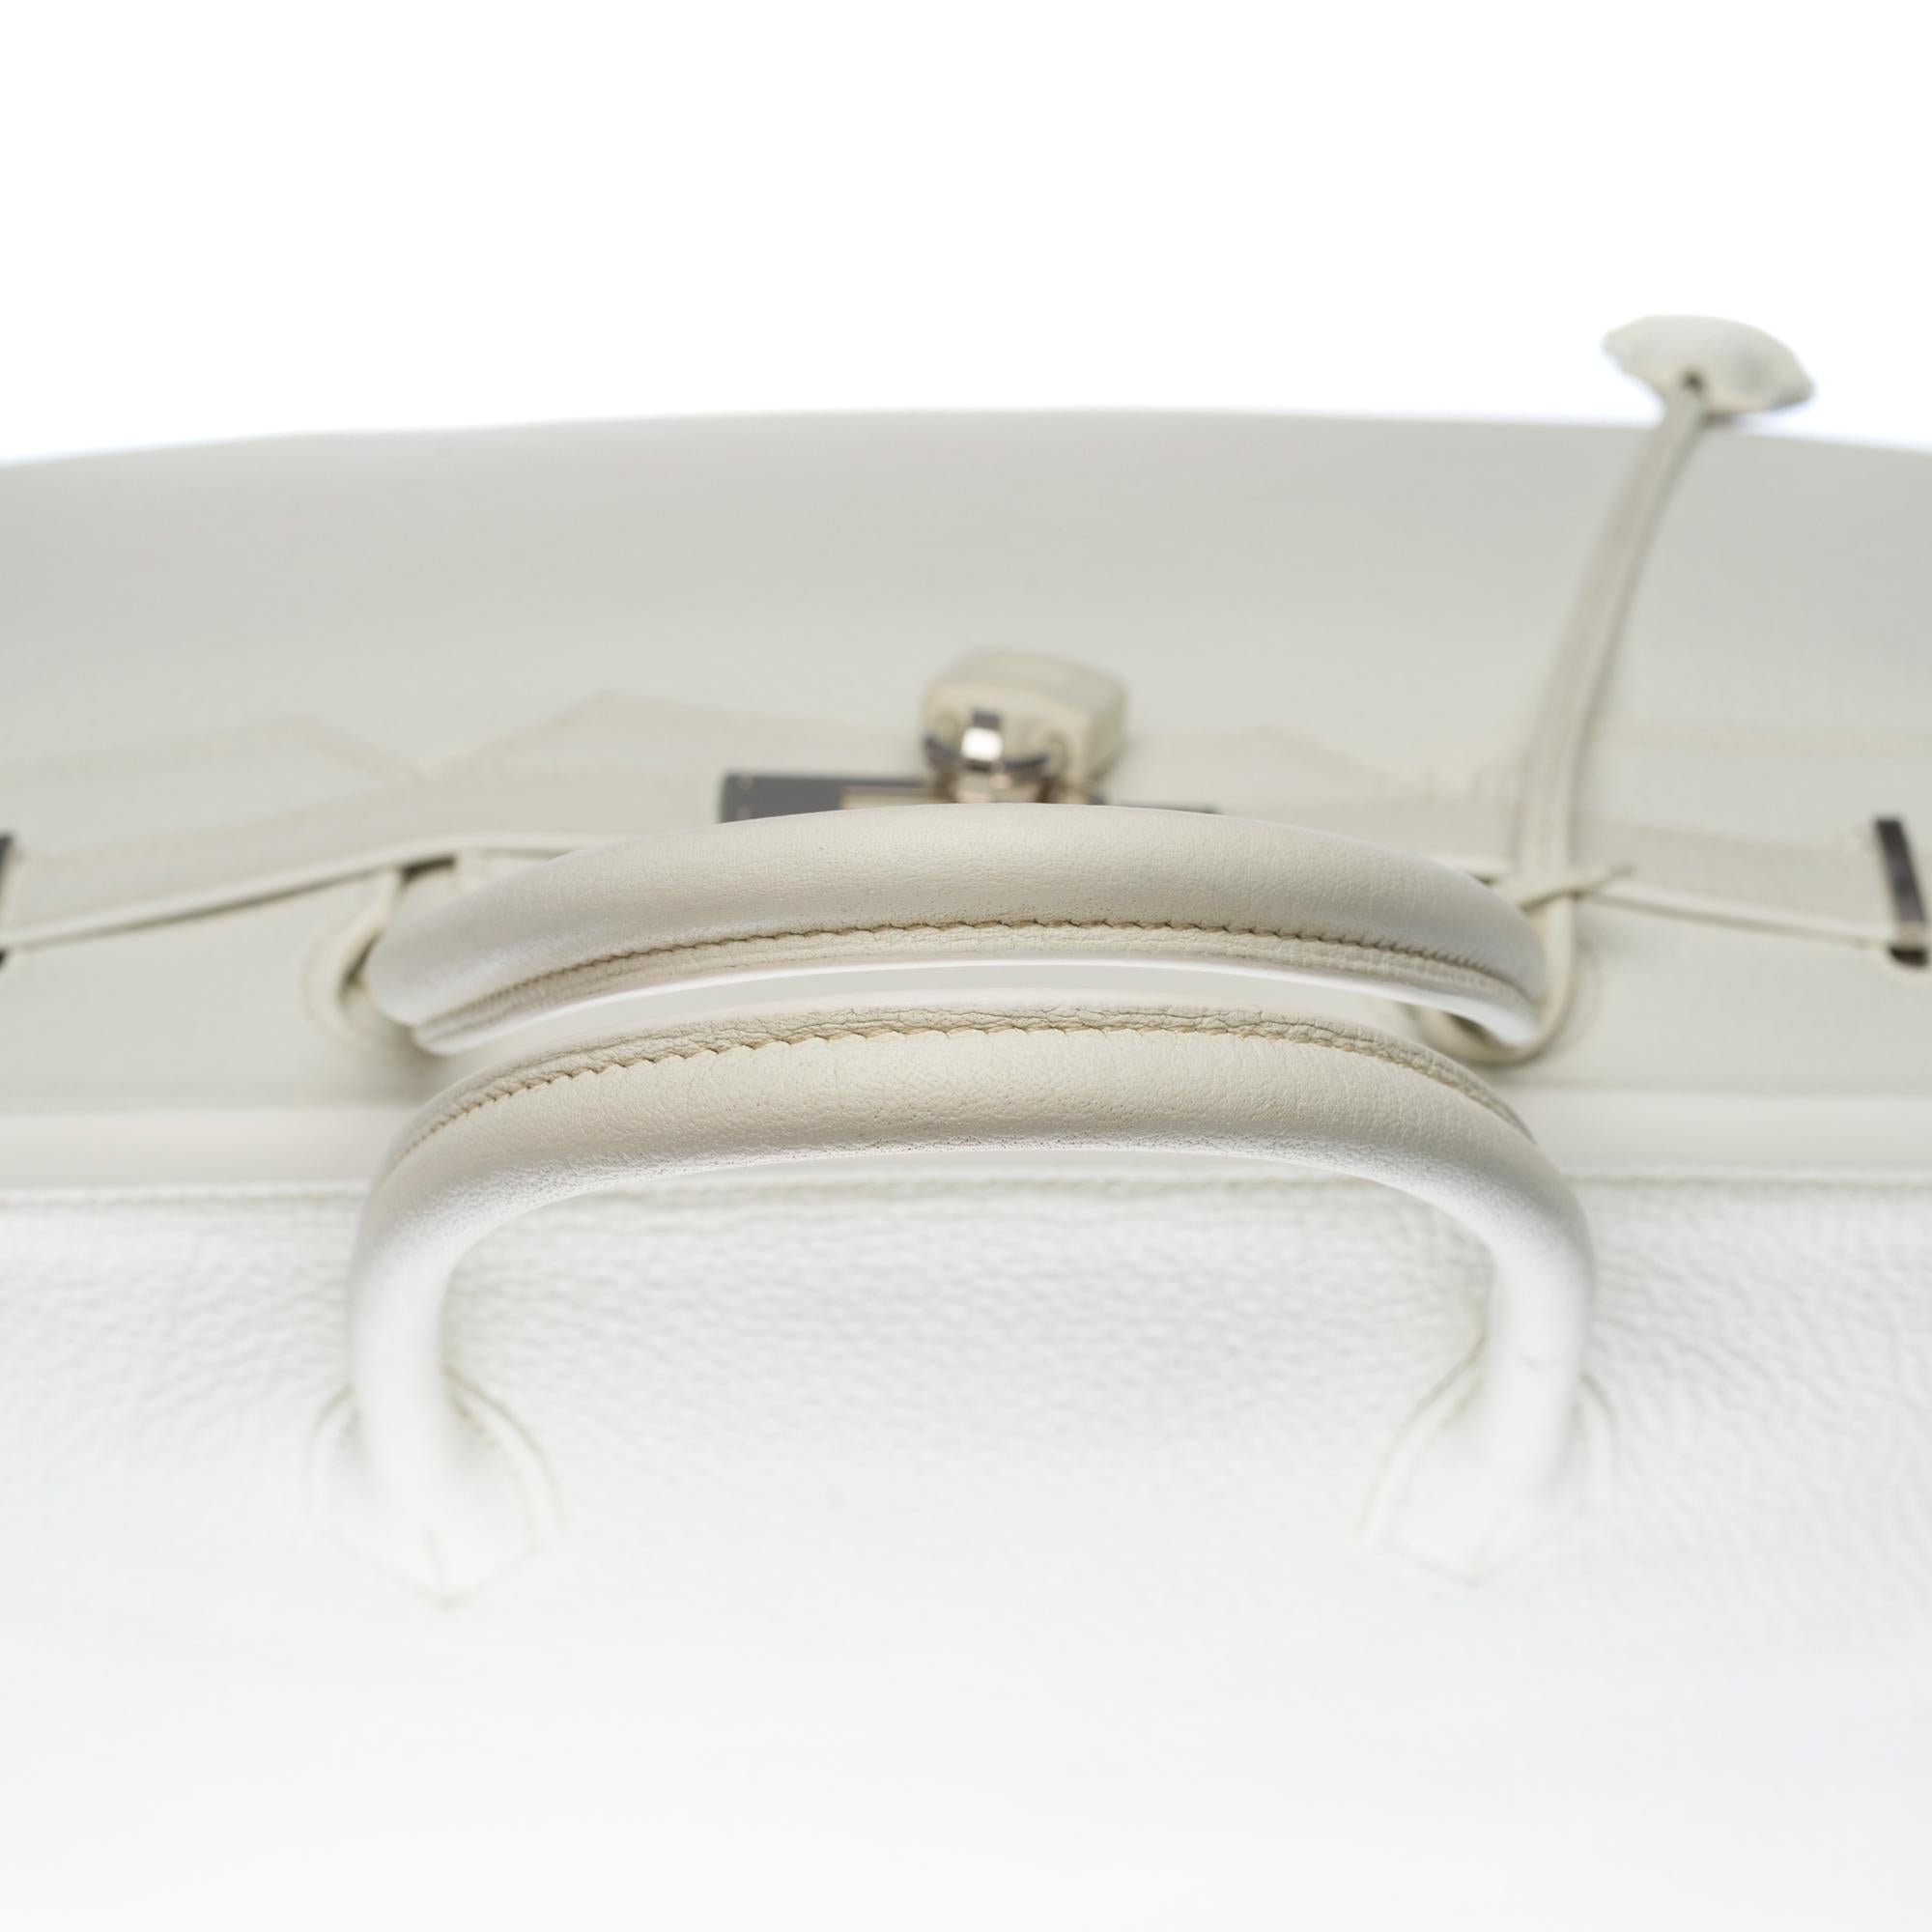 Stunning Hermes Birkin 40cm handbag in White Togo leather, SHW 3